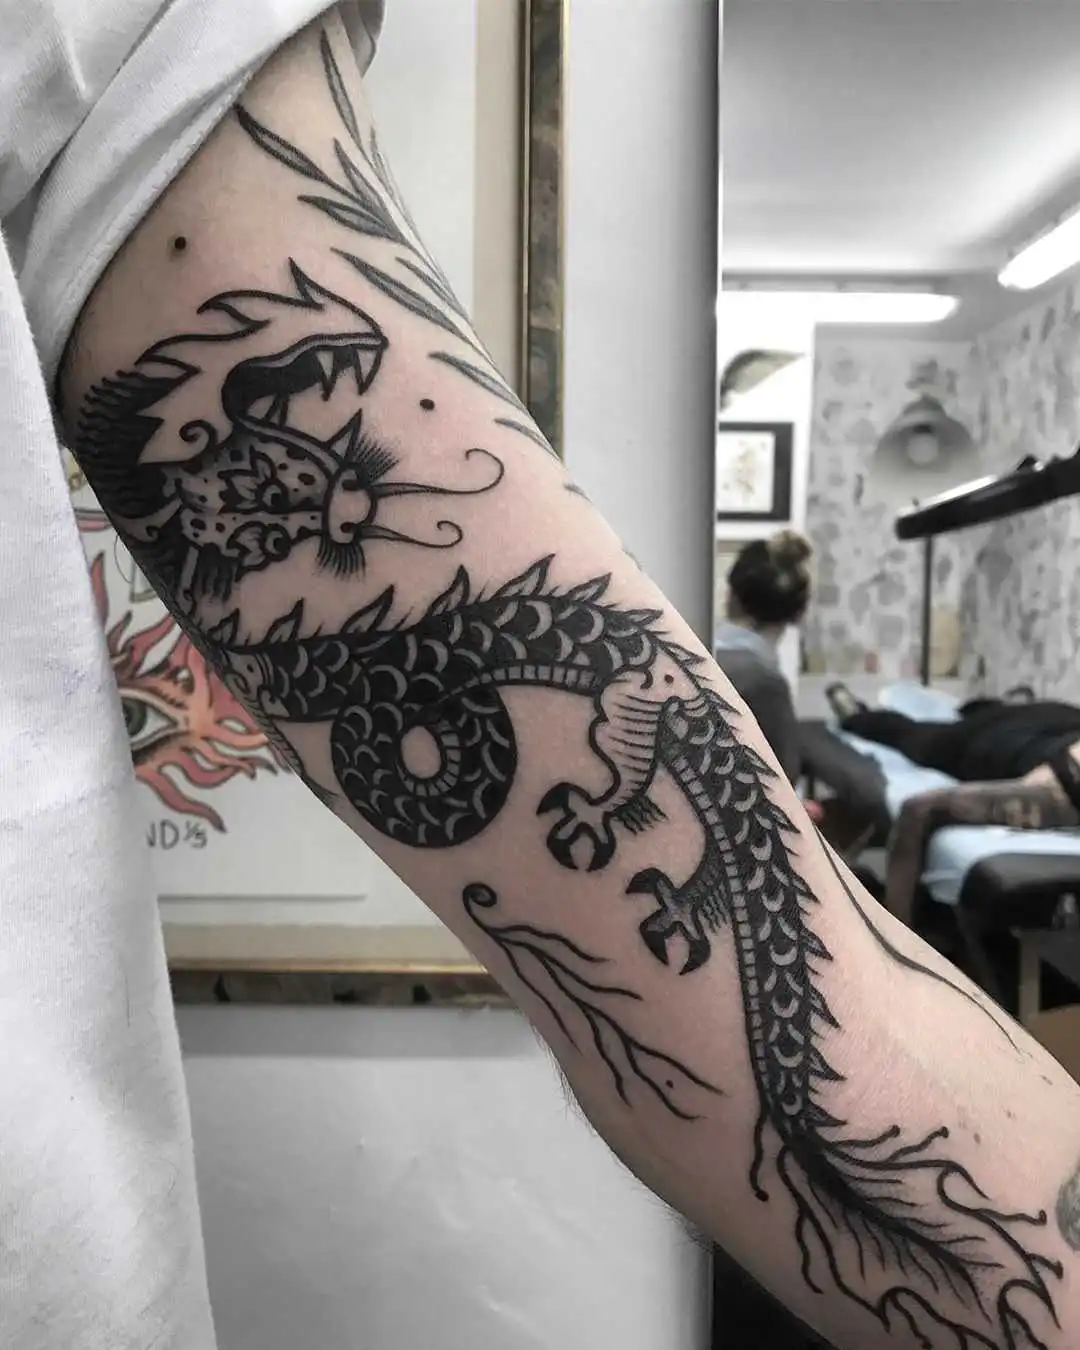 Black Dragon Tattoo Design